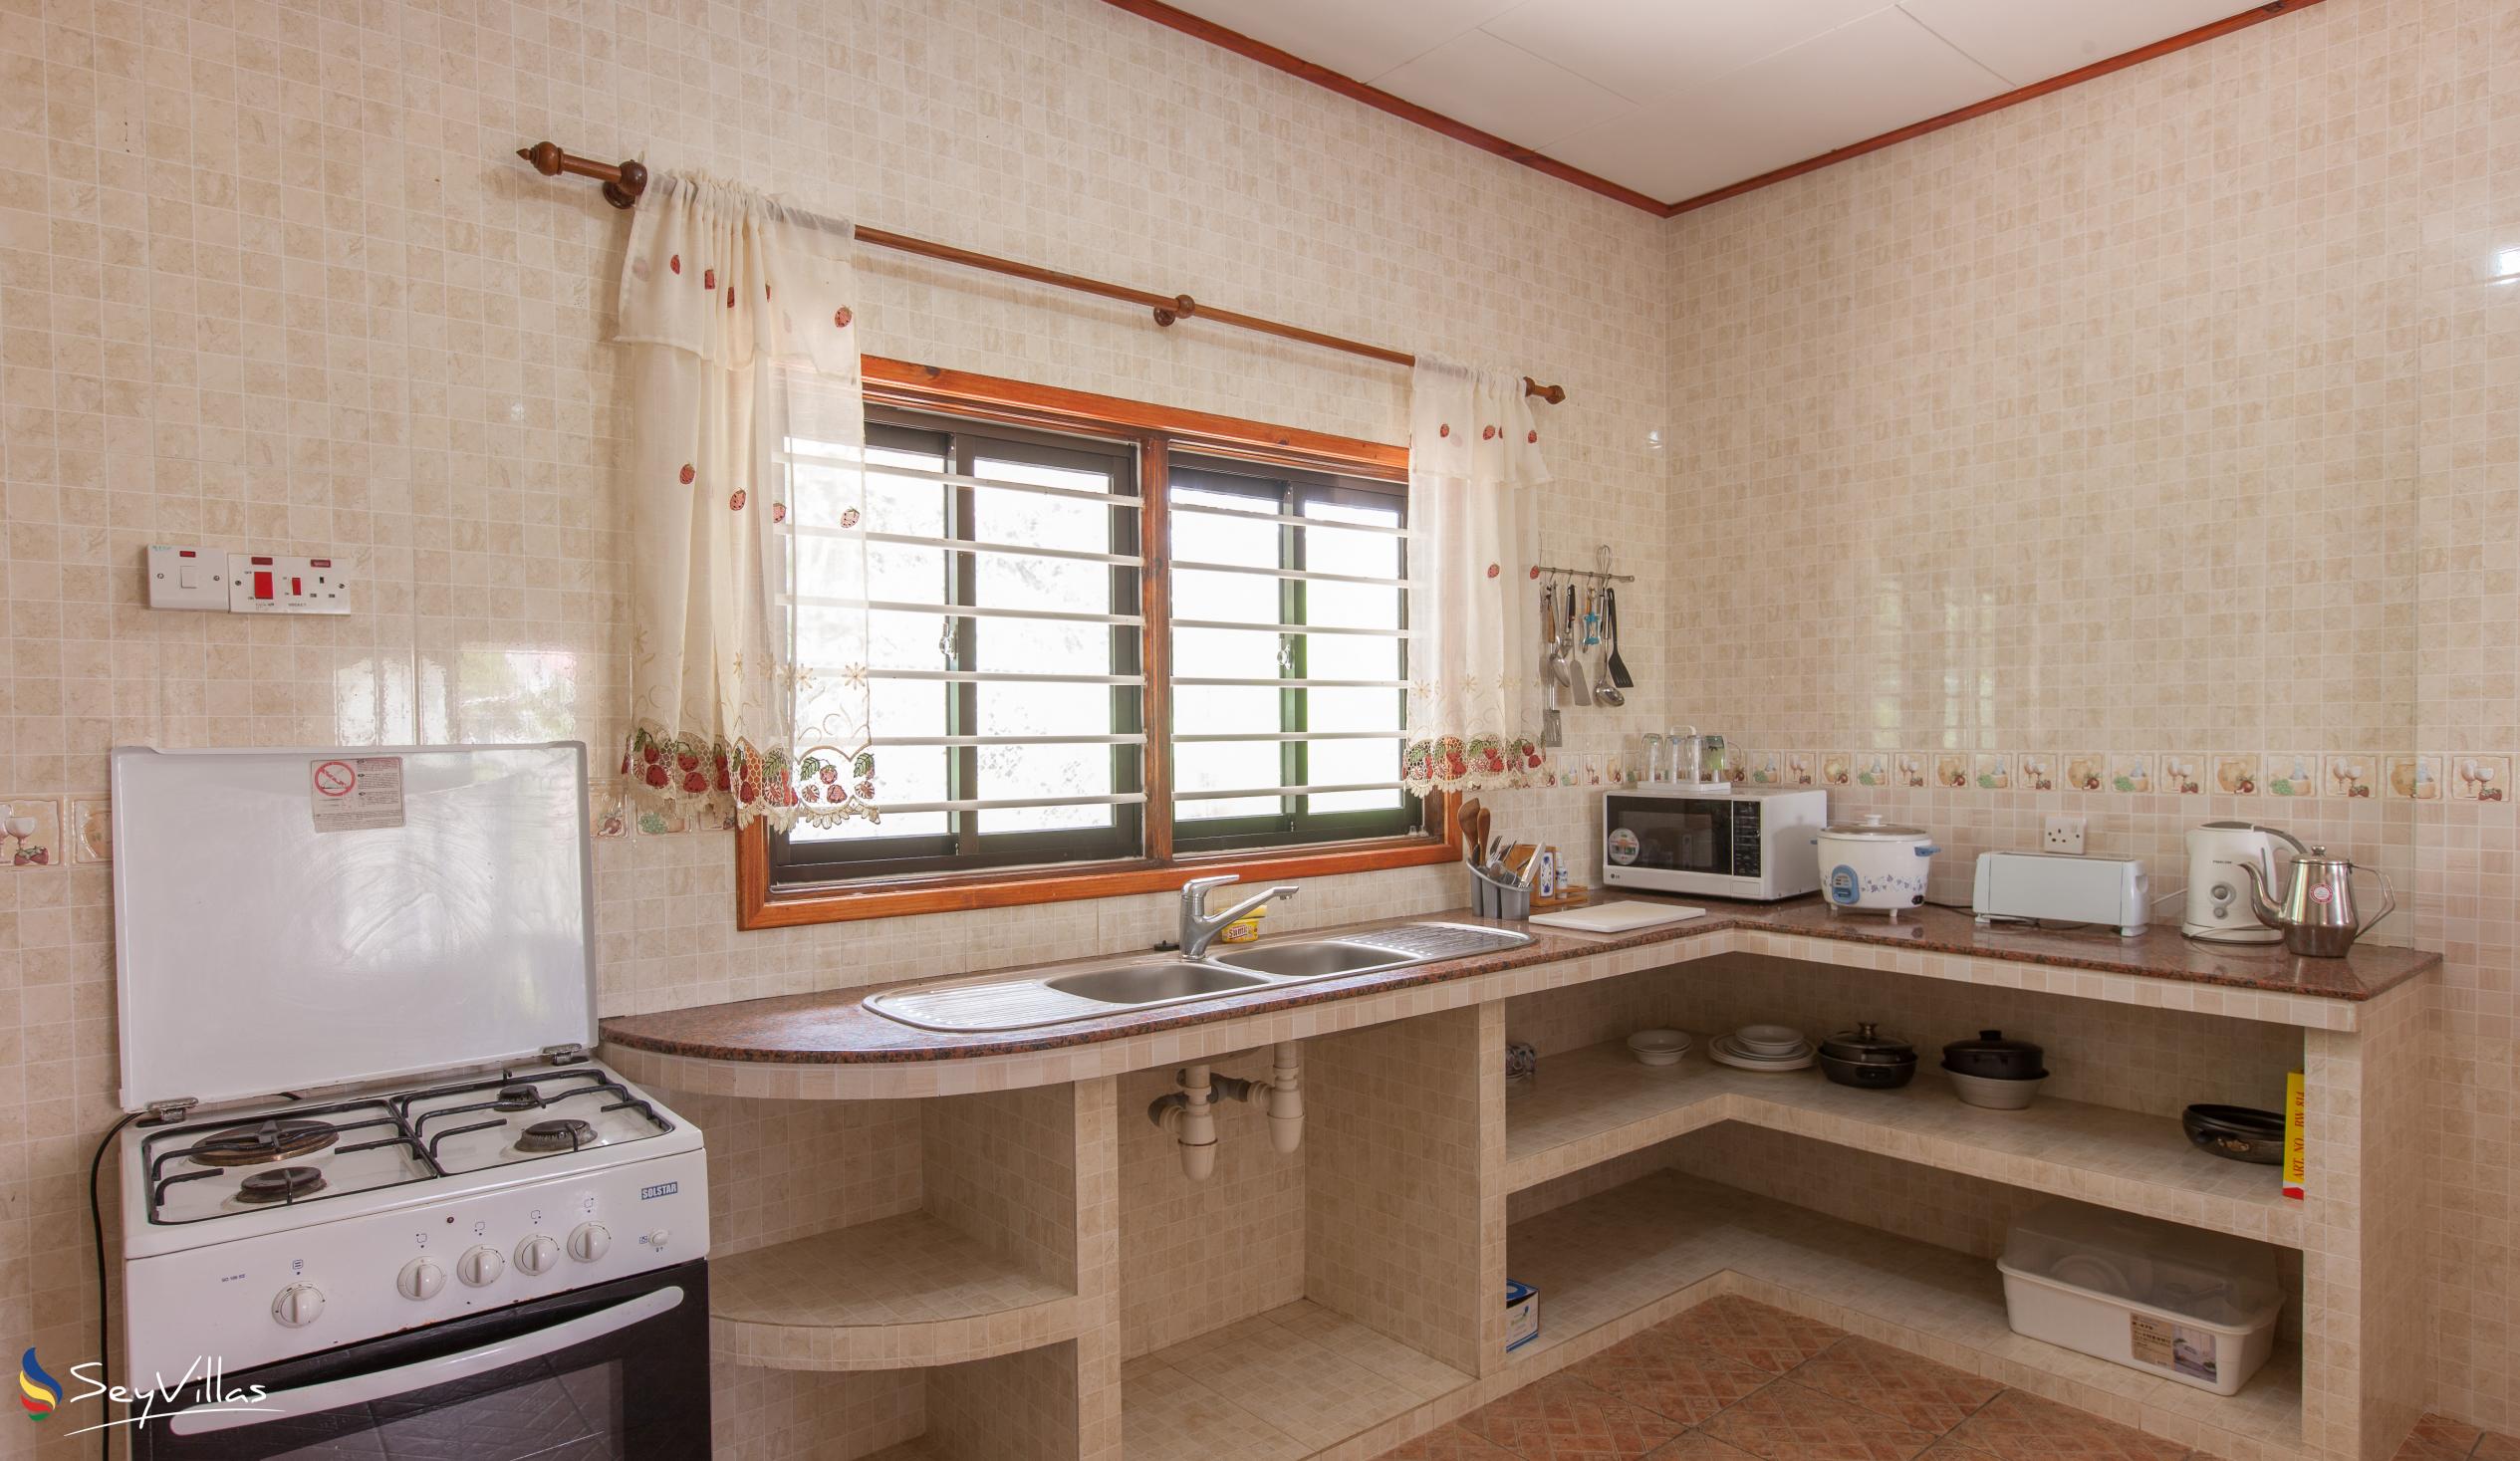 Foto 56: Zerof Self Catering  Apartments - Appartement à 3 chambres - La Digue (Seychelles)